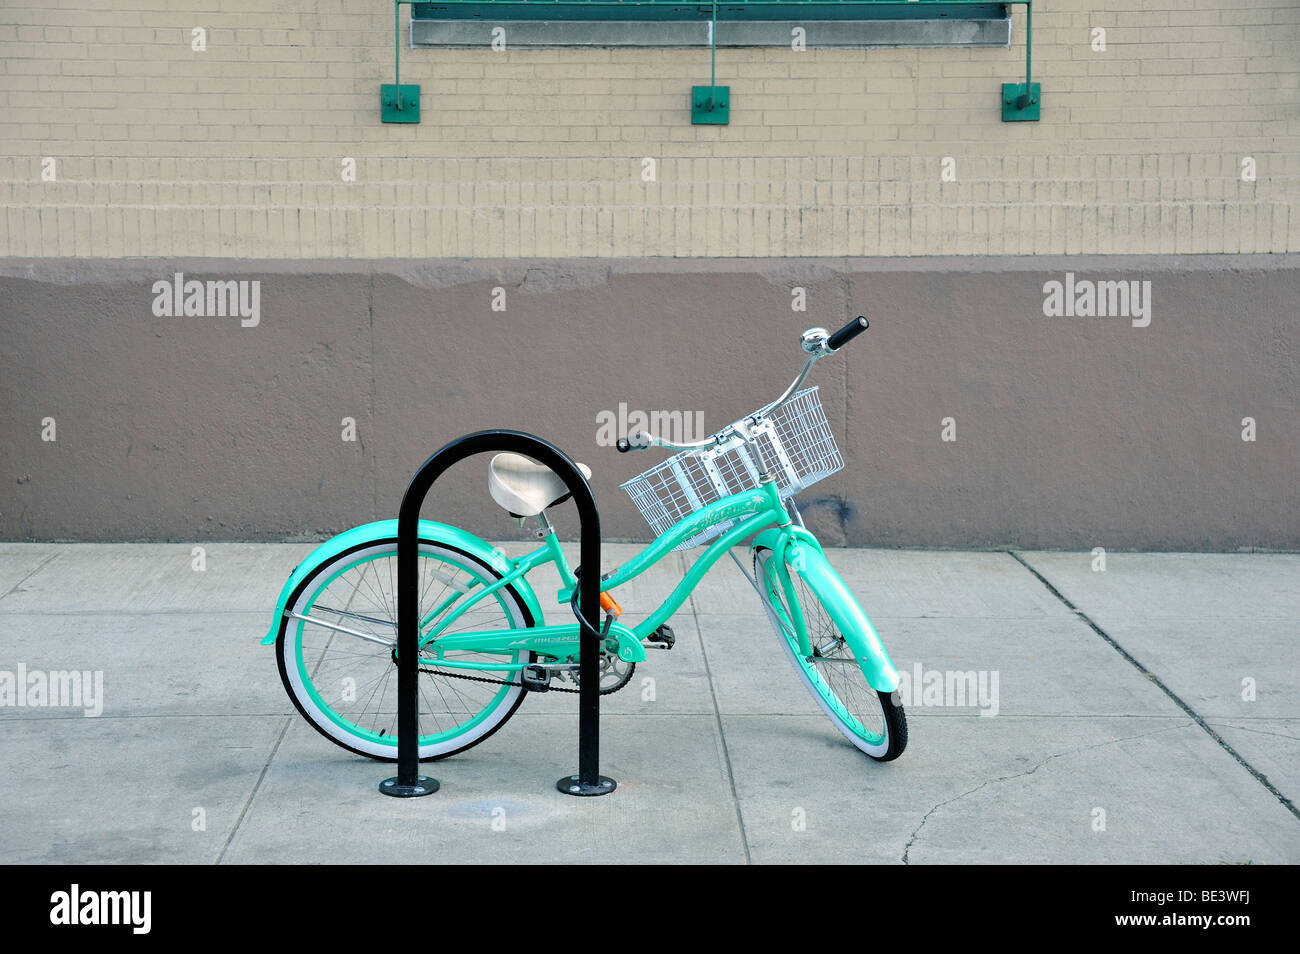 Frauen türkis grün open frame Beach Cruiser style Fahrrad mit einem Korb am Lenker, Fahrrad stand in New York City gesperrt Stockfoto